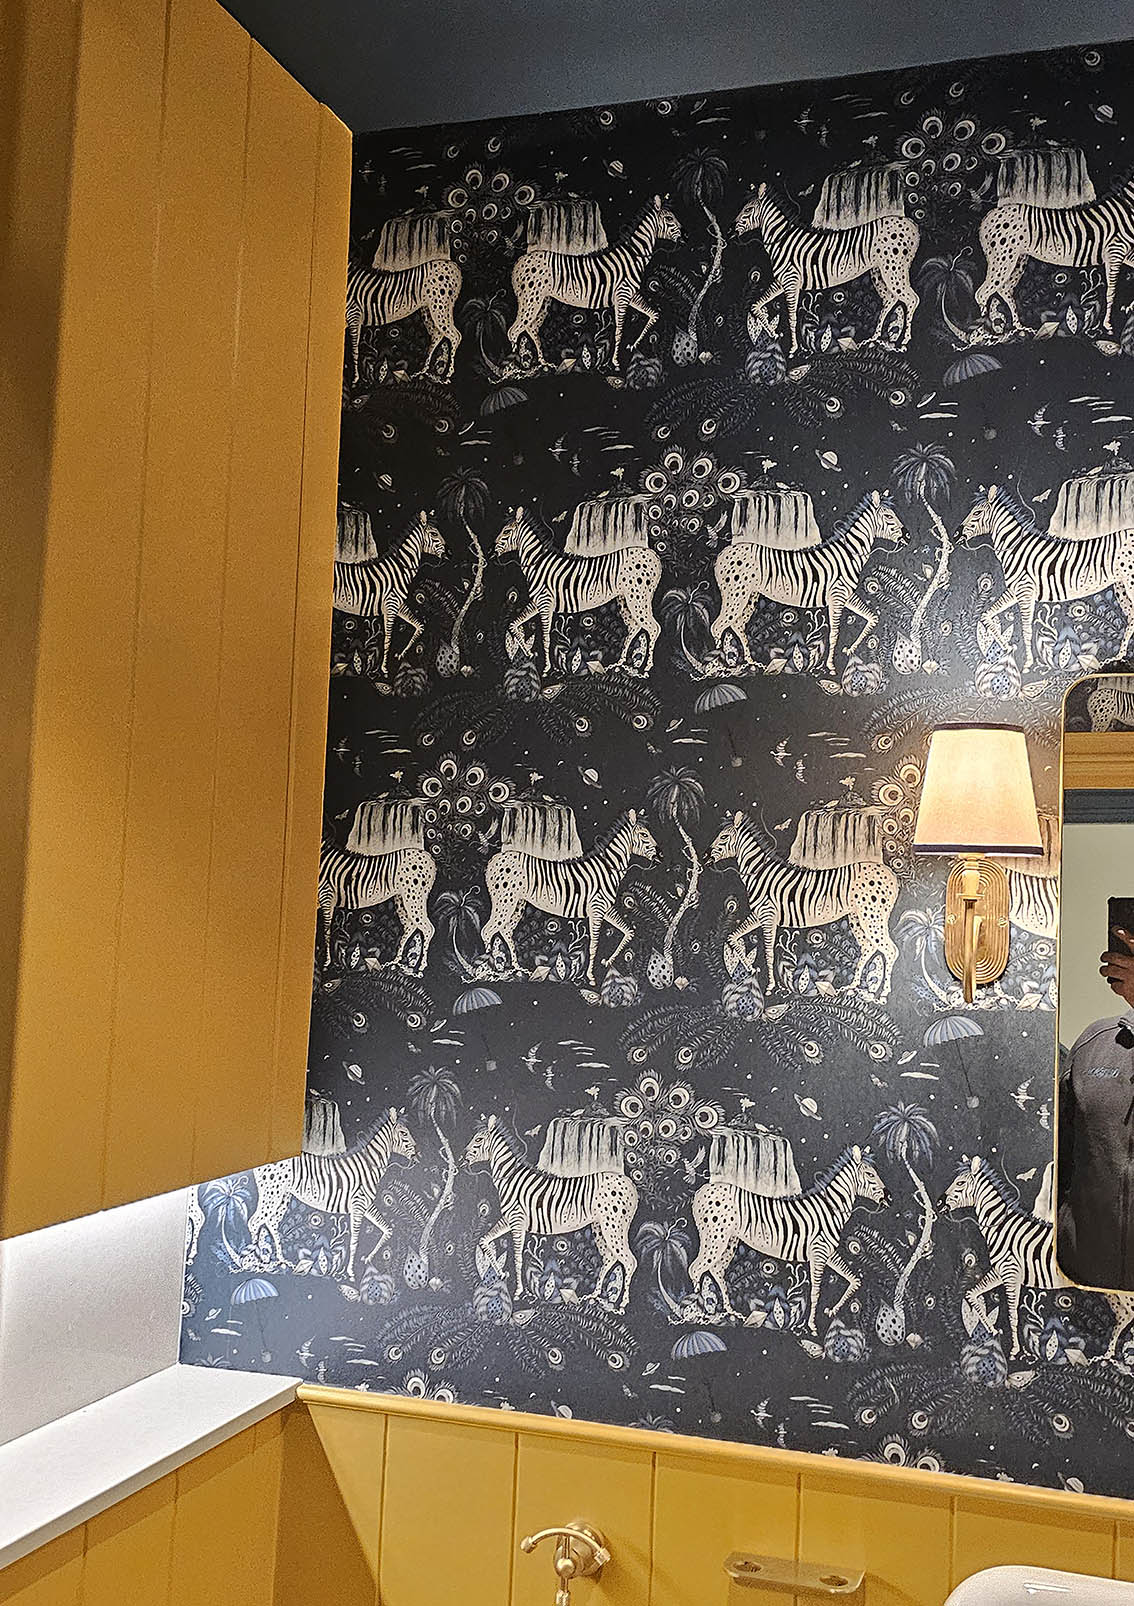 Professional wallpaper installation of zebras wallpaper in a bathroom.